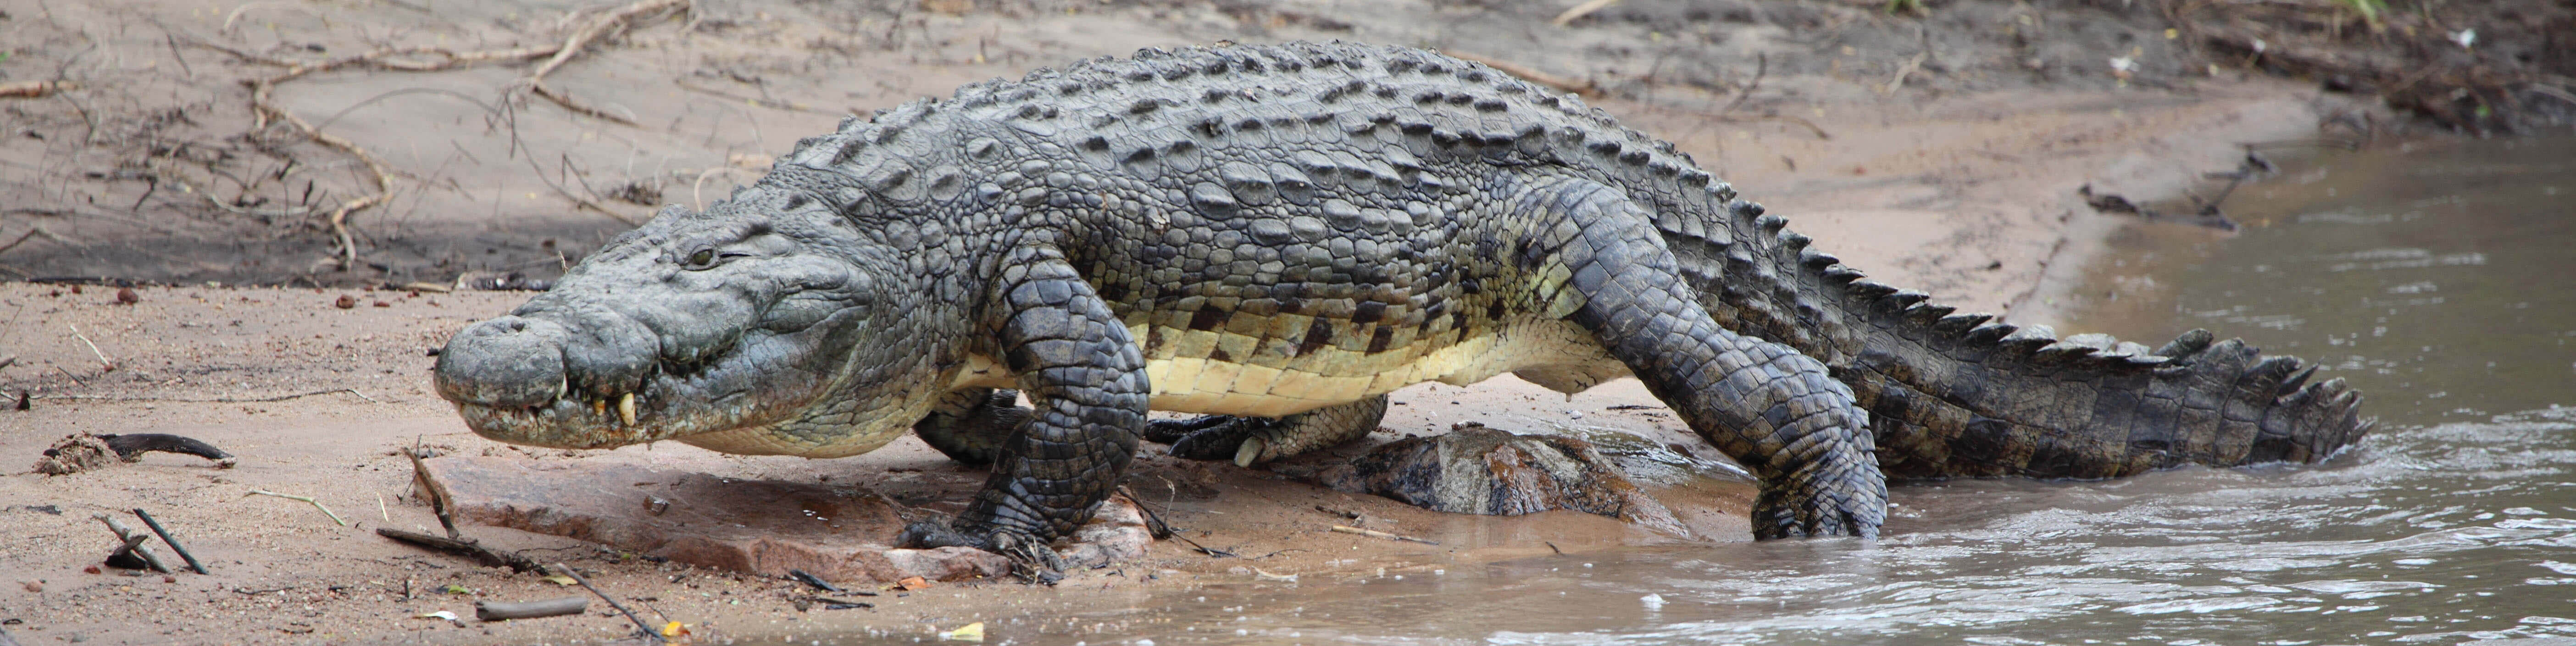 Nile crocodile in Serengeti